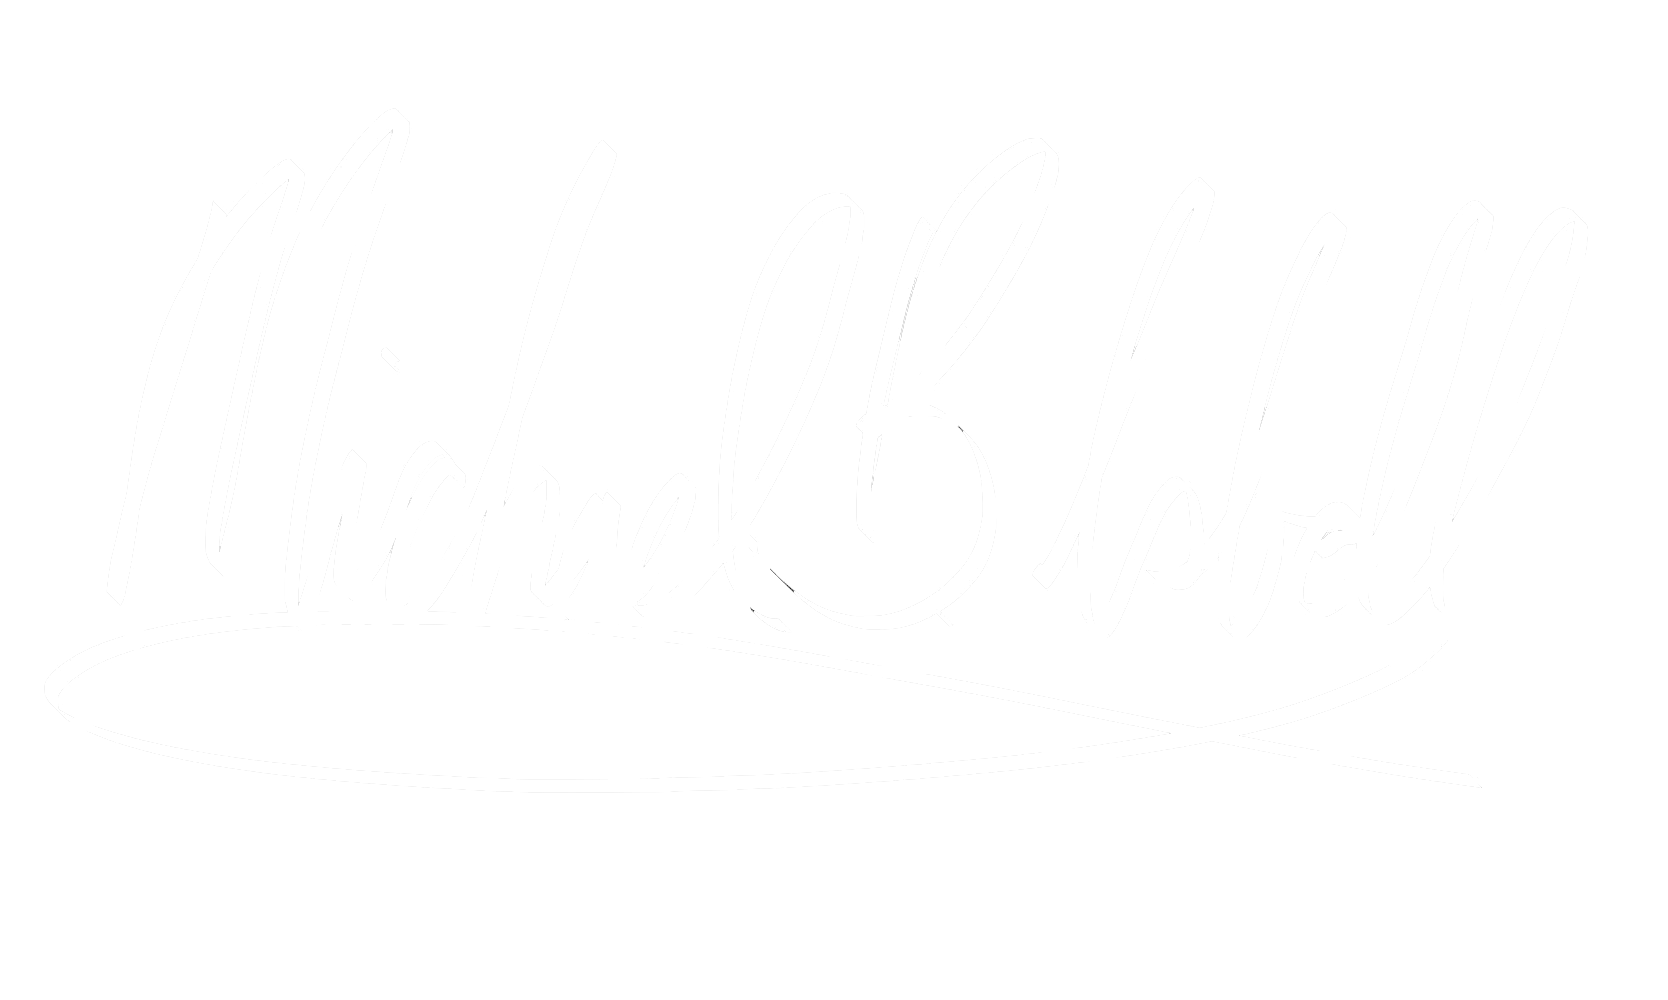 Michael B Isbell's signature in white written in cursive